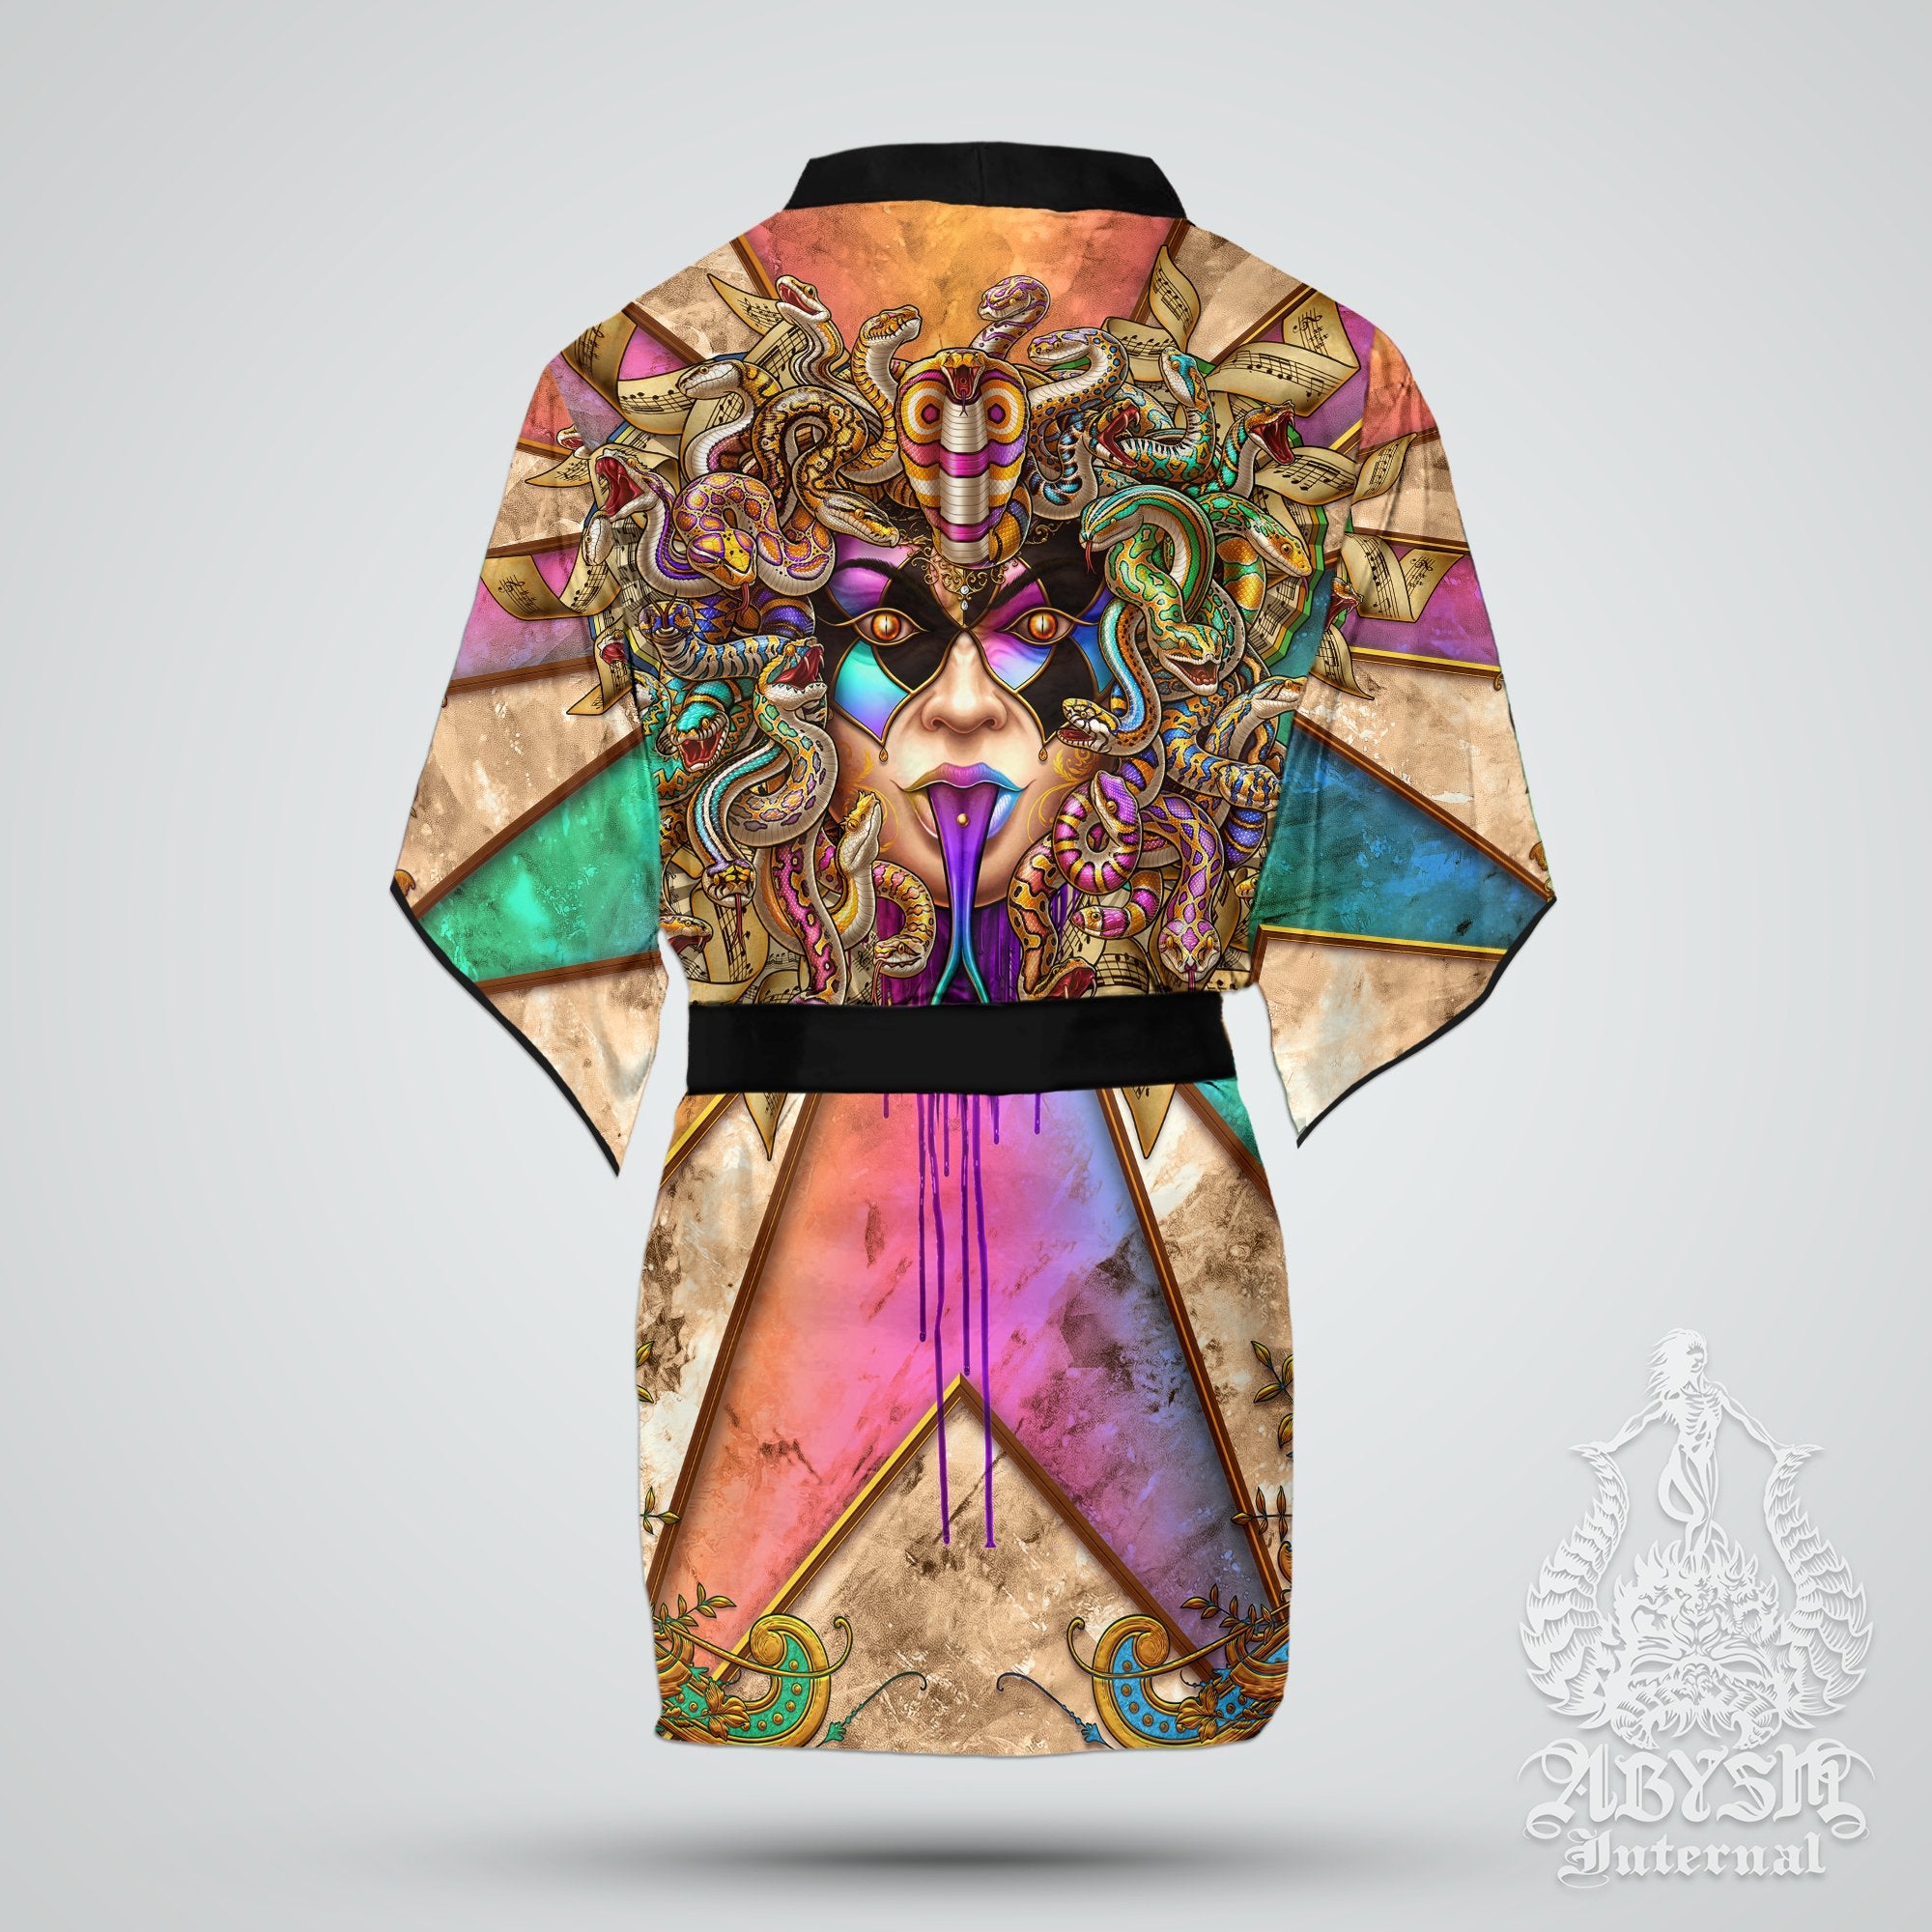 Carnival Short Kimono Robe, Beach Party Outfit, Coverup, Summer Festival, Alternative Clothing, Unisex - Medusa, 7 Colors - Abysm Internal